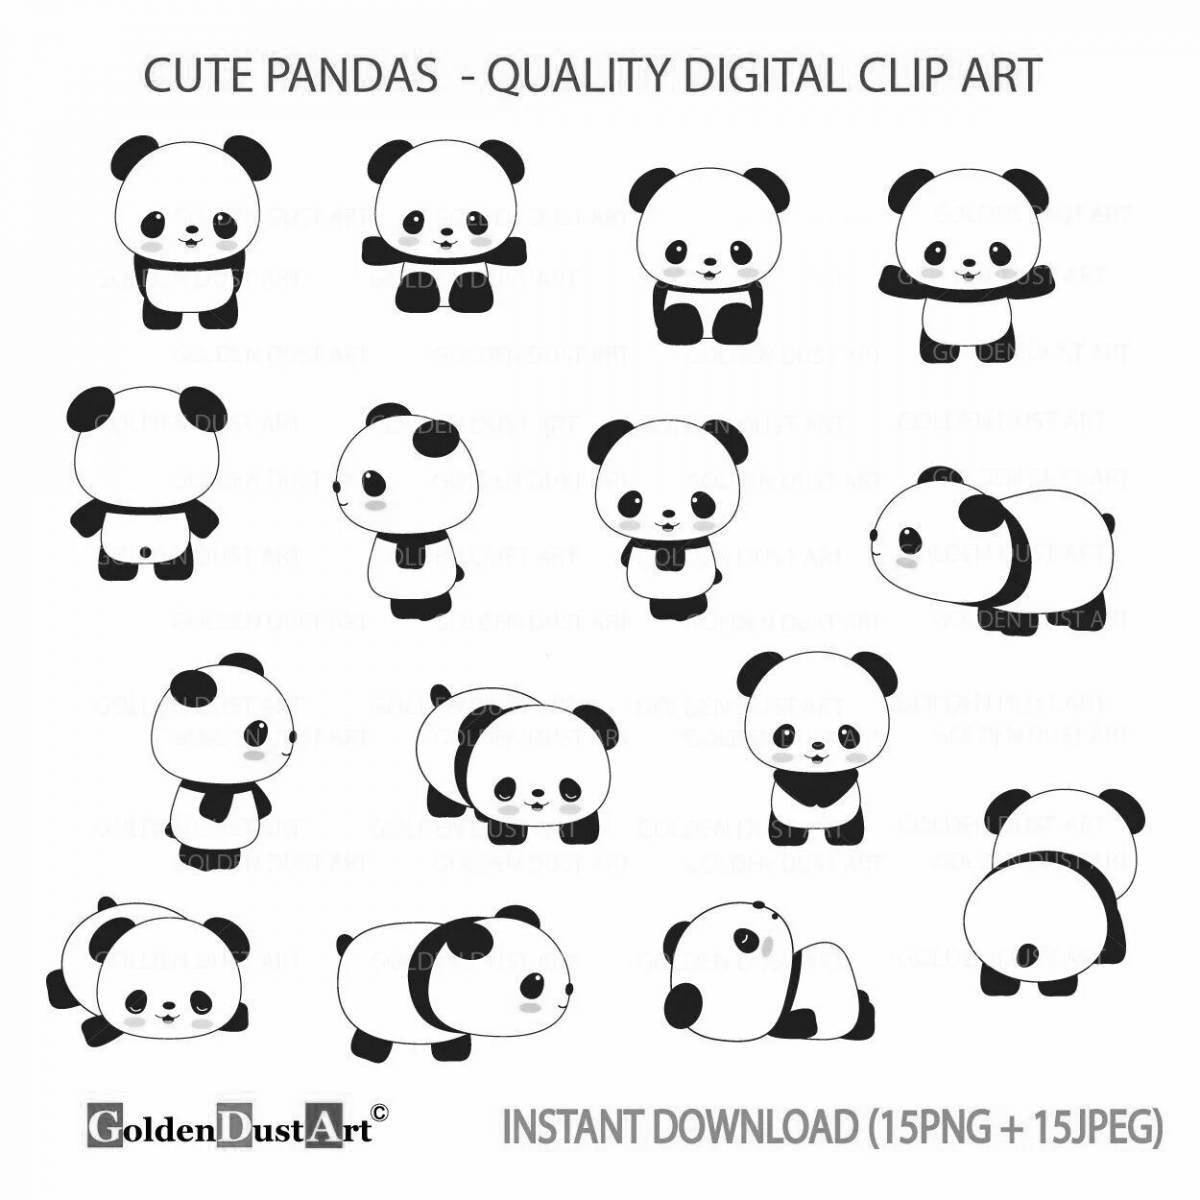 Adorable little panda coloring book